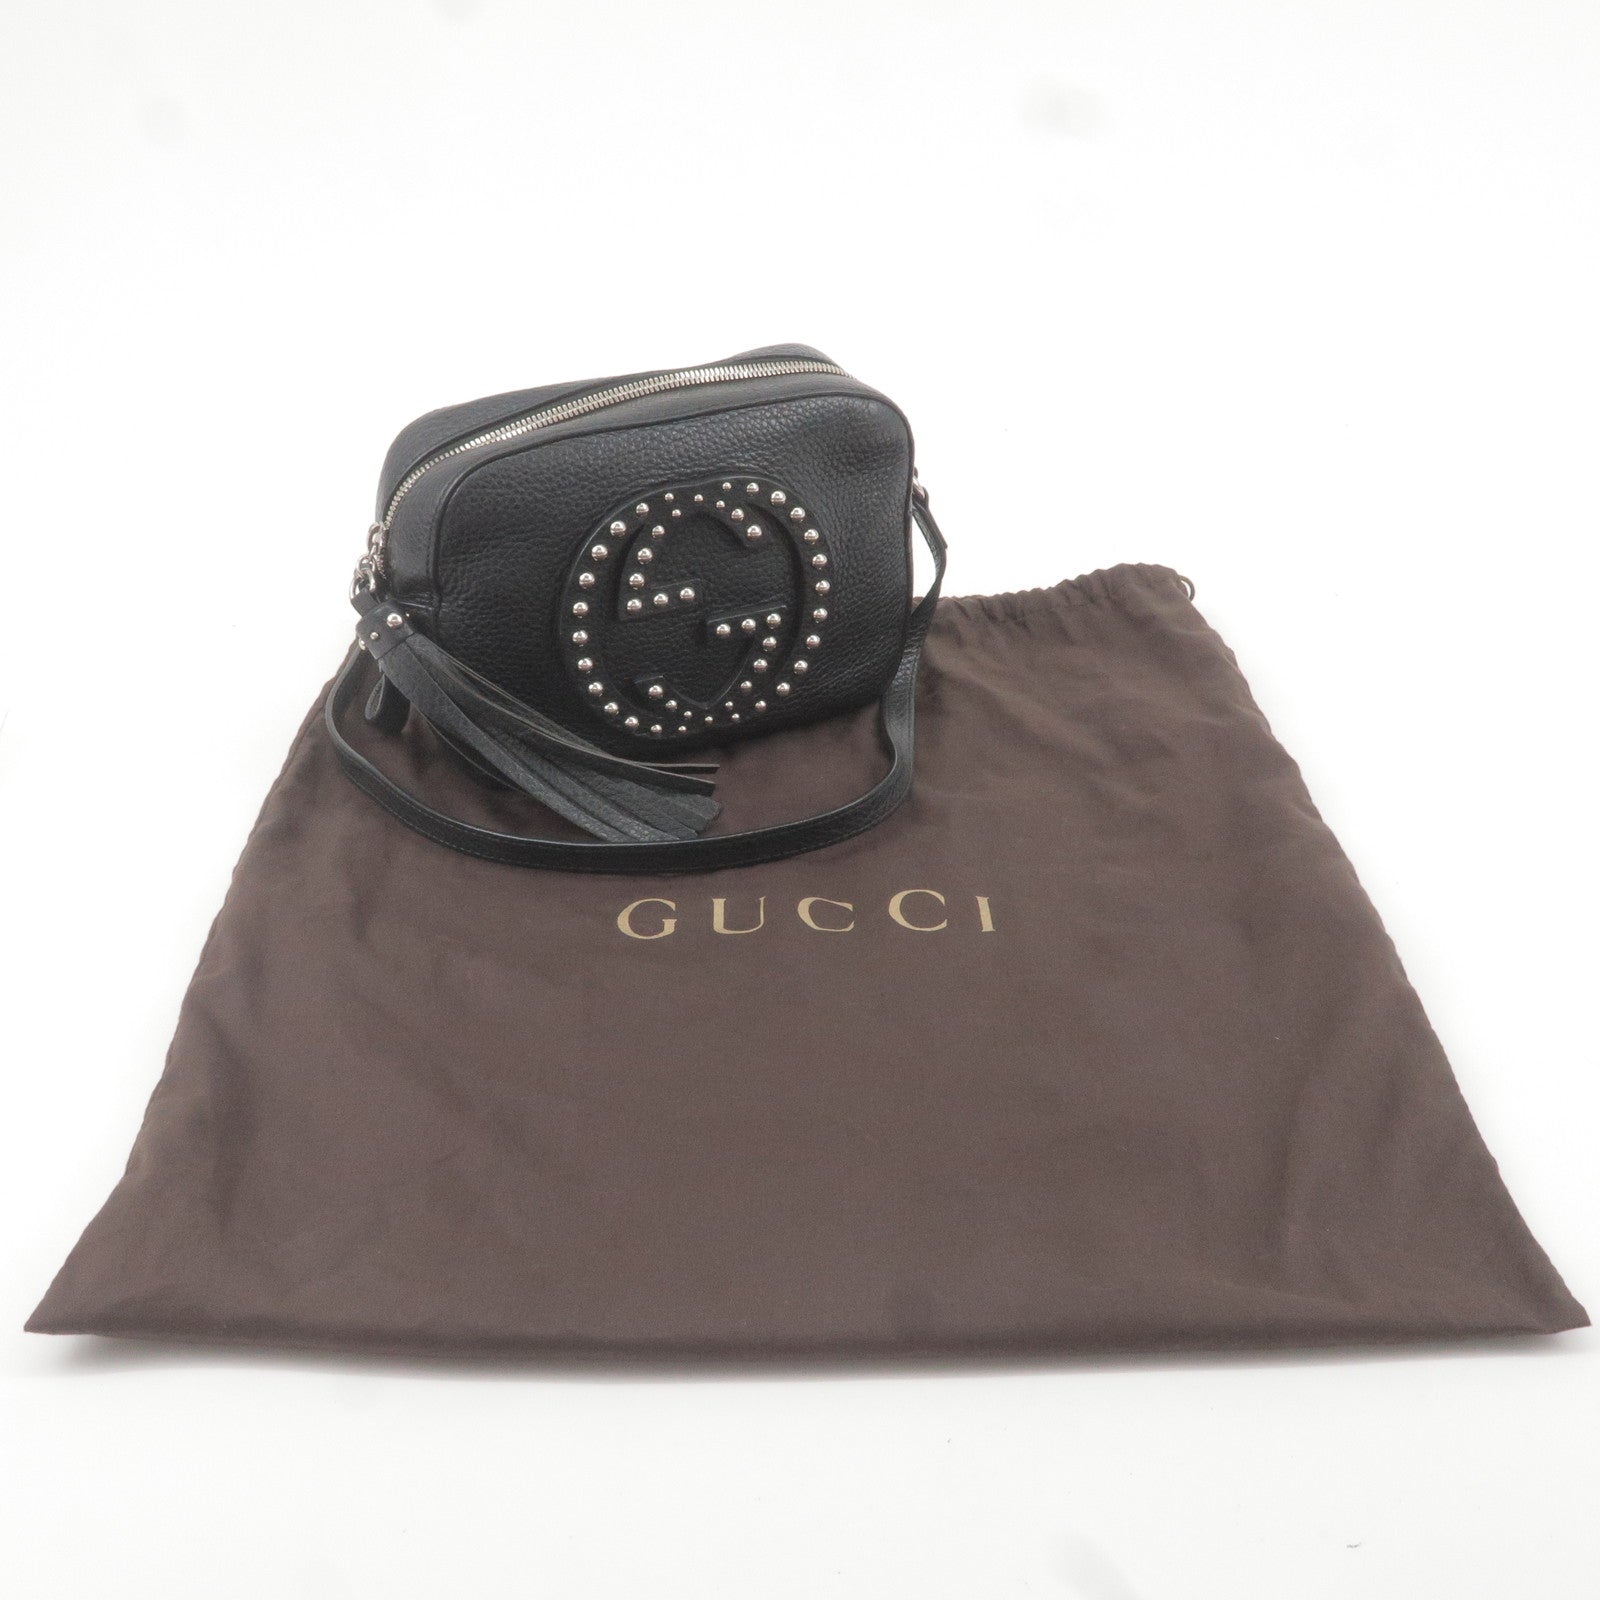 GUCCI-SOHO-Small-Disco-Studs-Leather-Shoulder-Bag-Black-308364